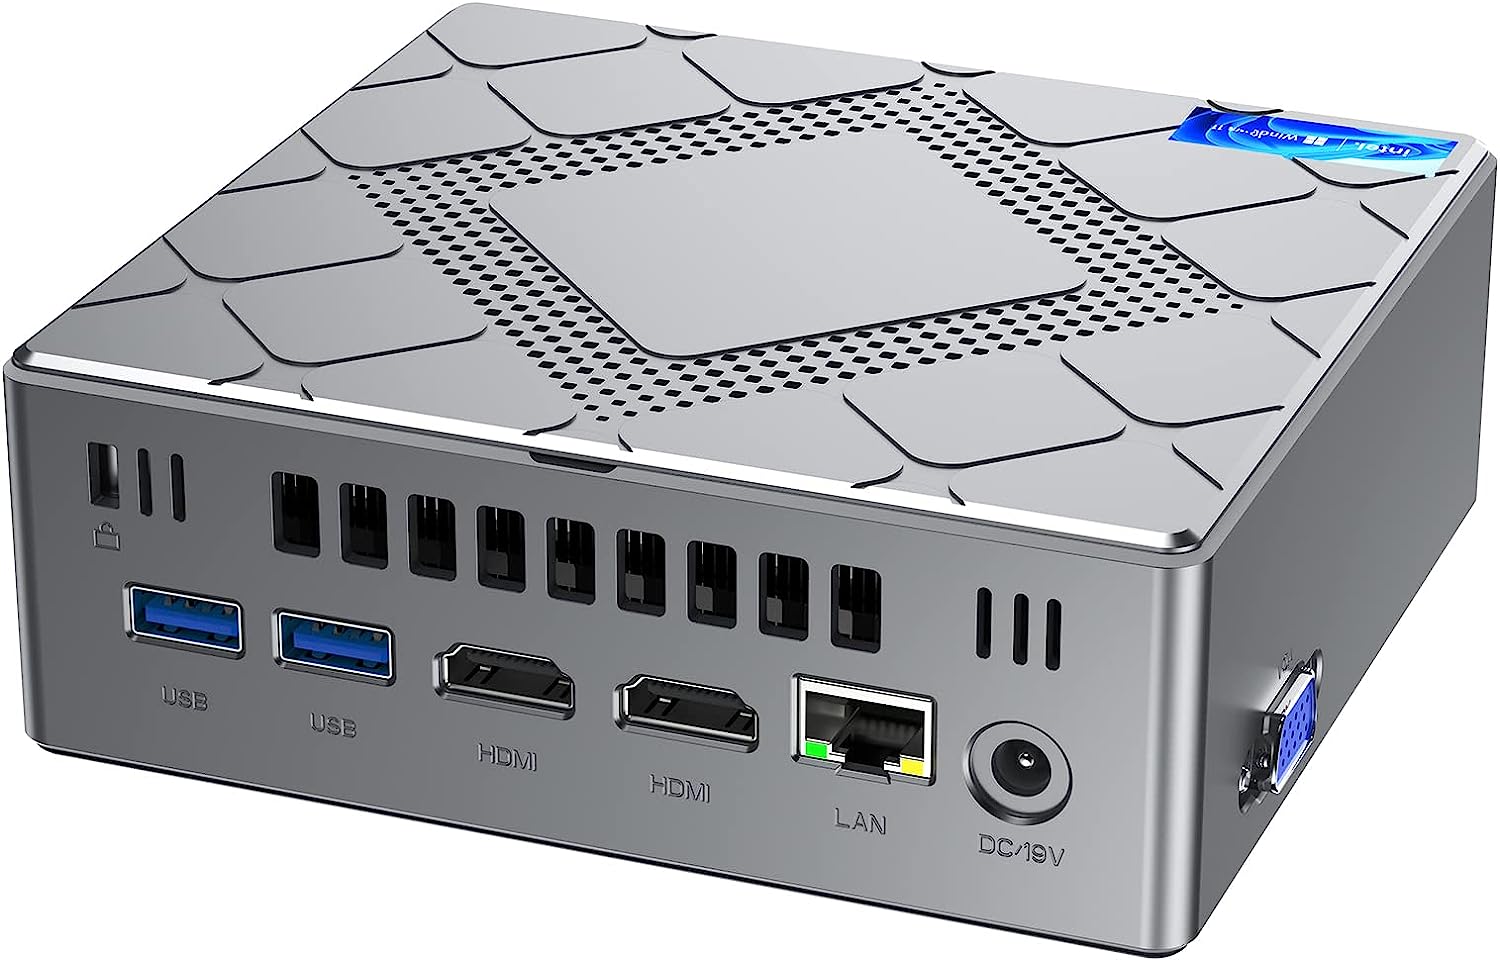 NiPoGi CK10 review - mini PC with Intel Core i7-11390H